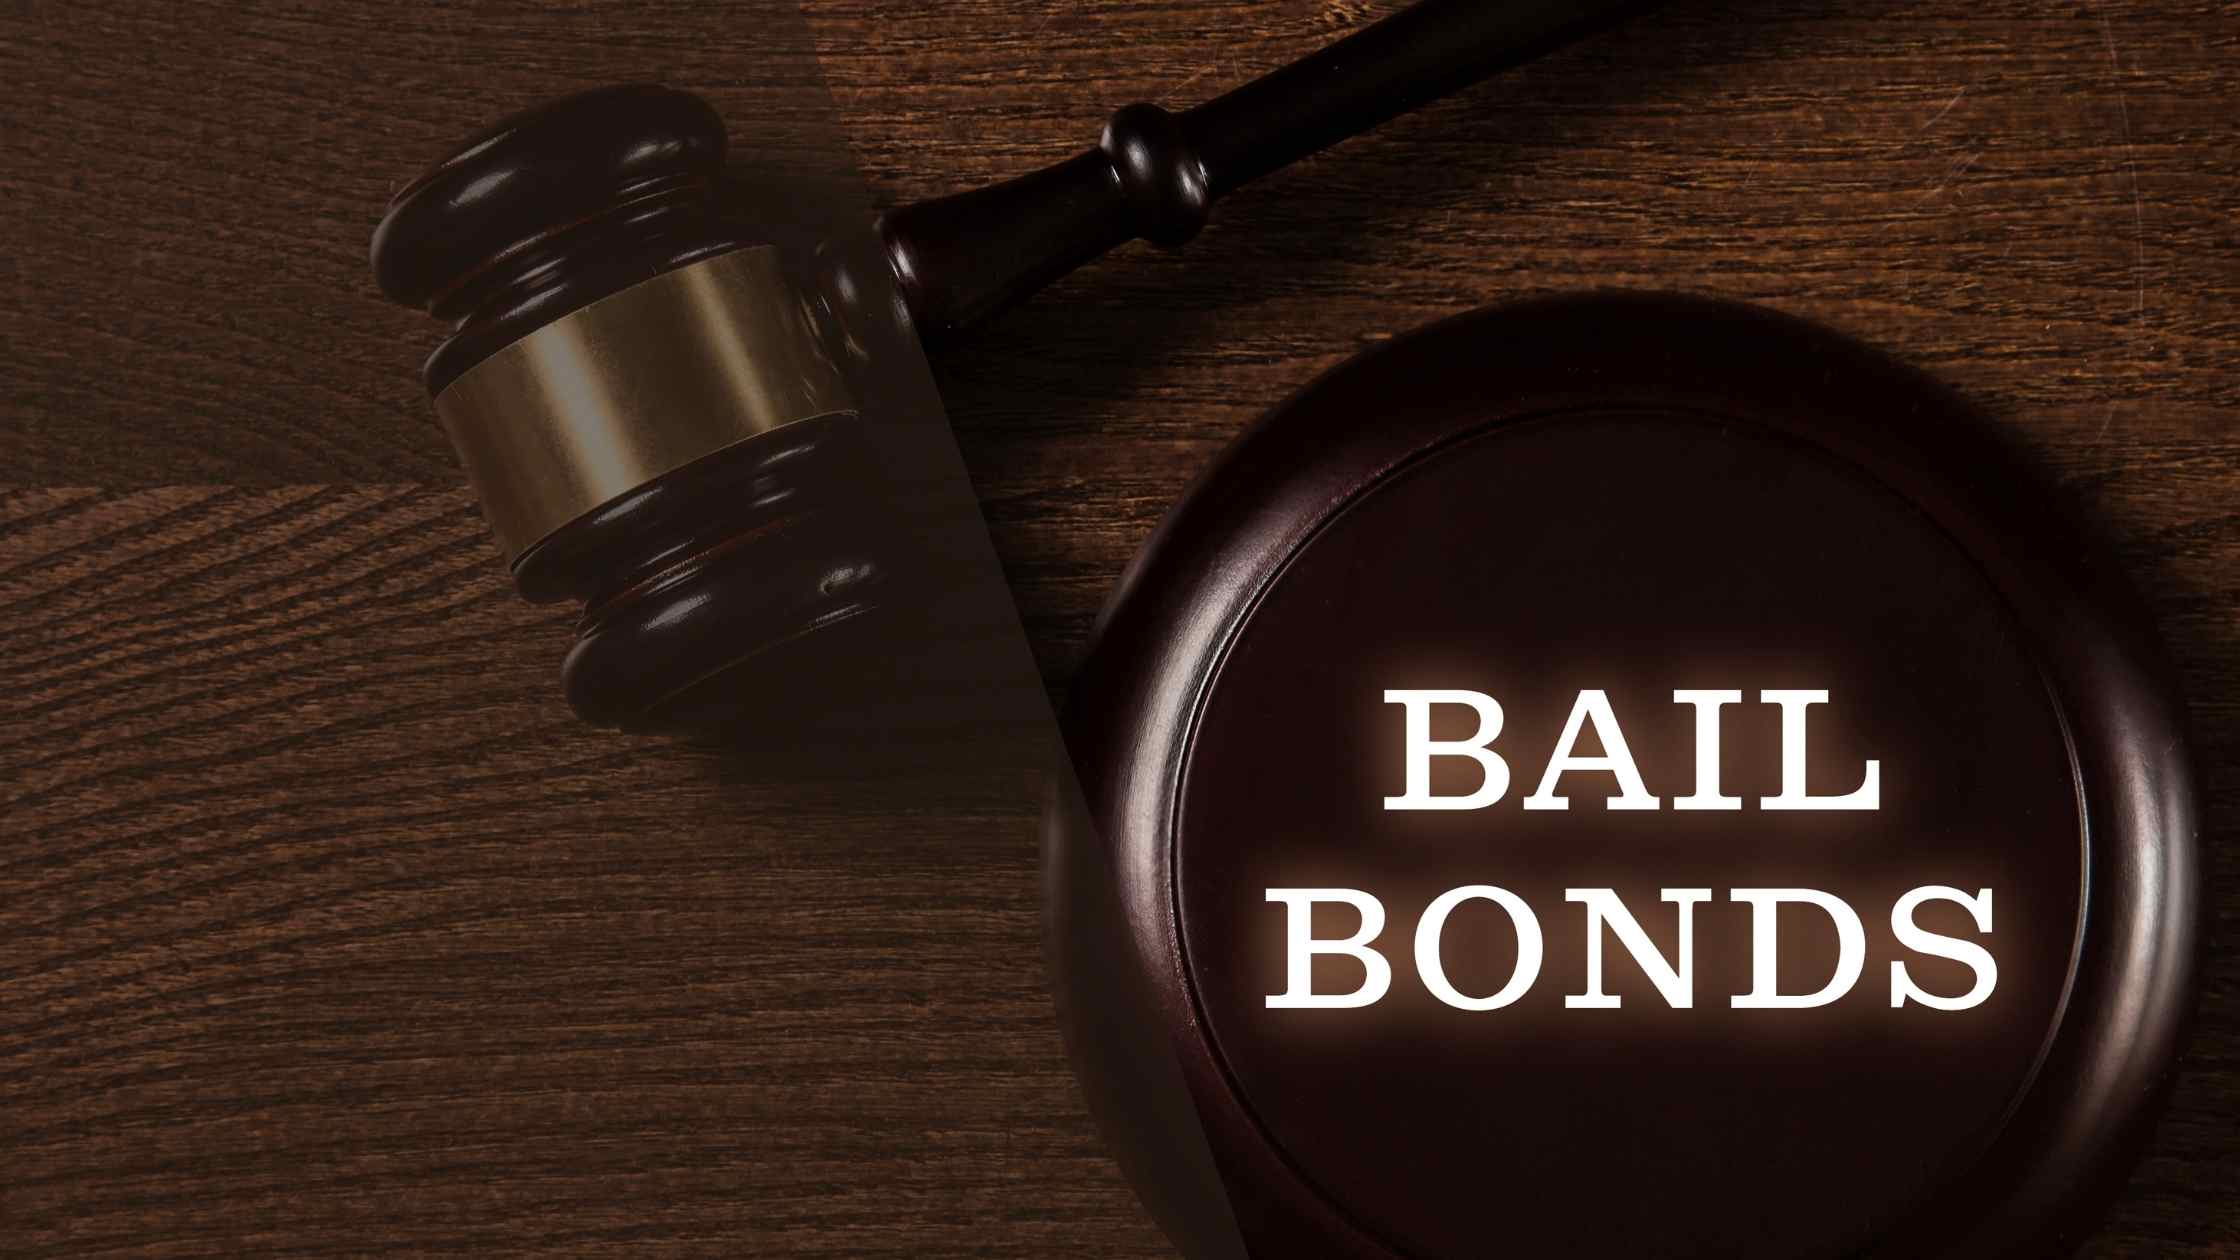 Proven Ways how bail bondsman make money 2022